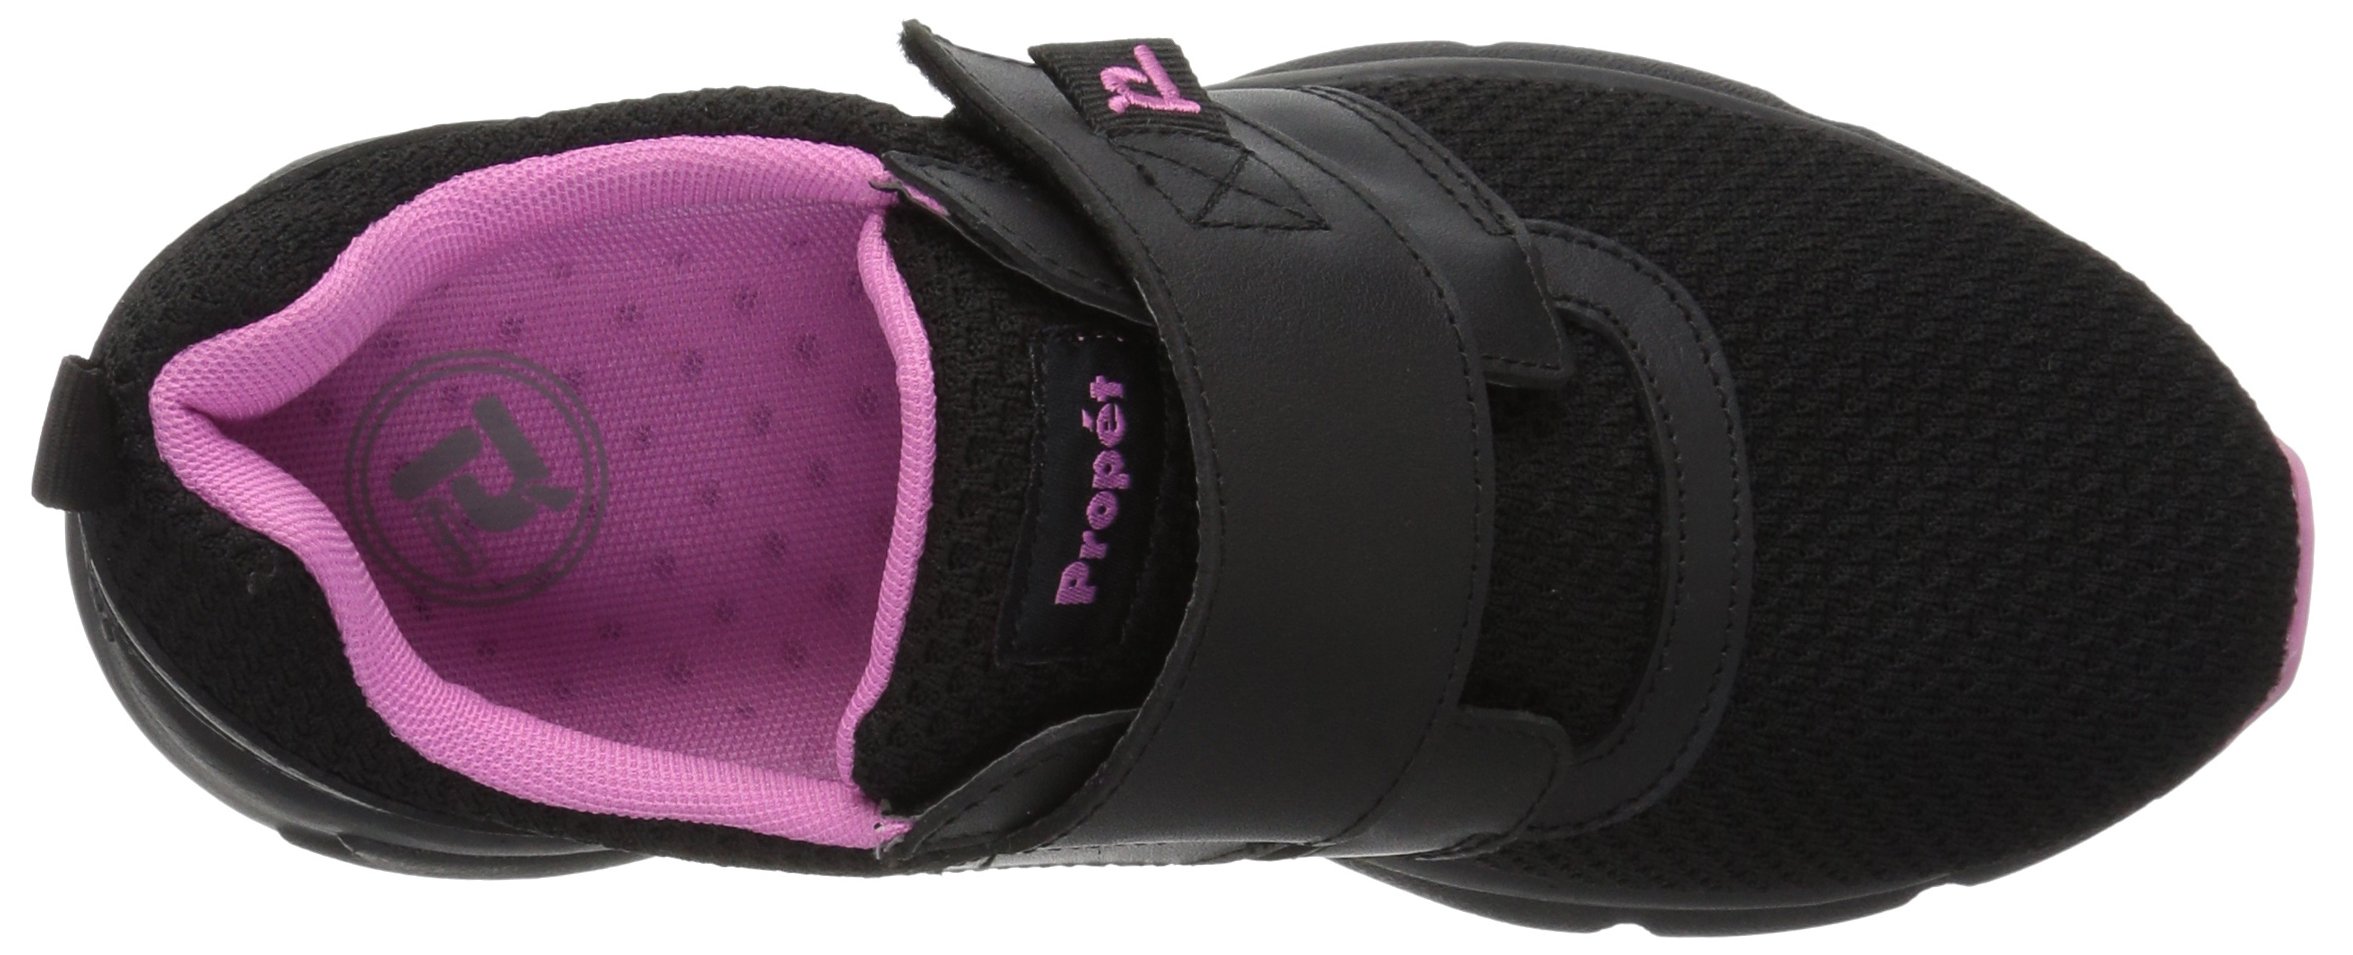 Propét Women's Stability X Strap Sneaker